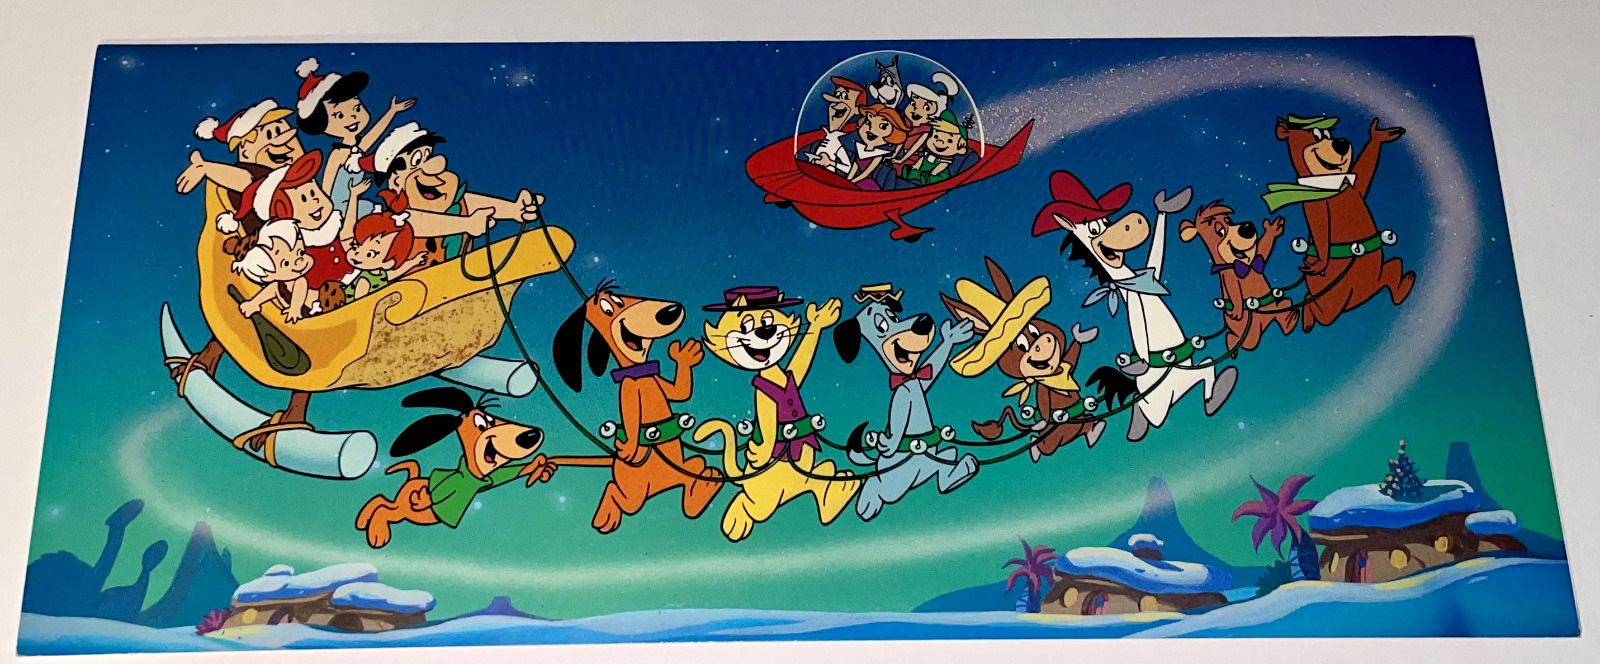 Hanna Barbera Seasons Greetings Holiday Card Rare